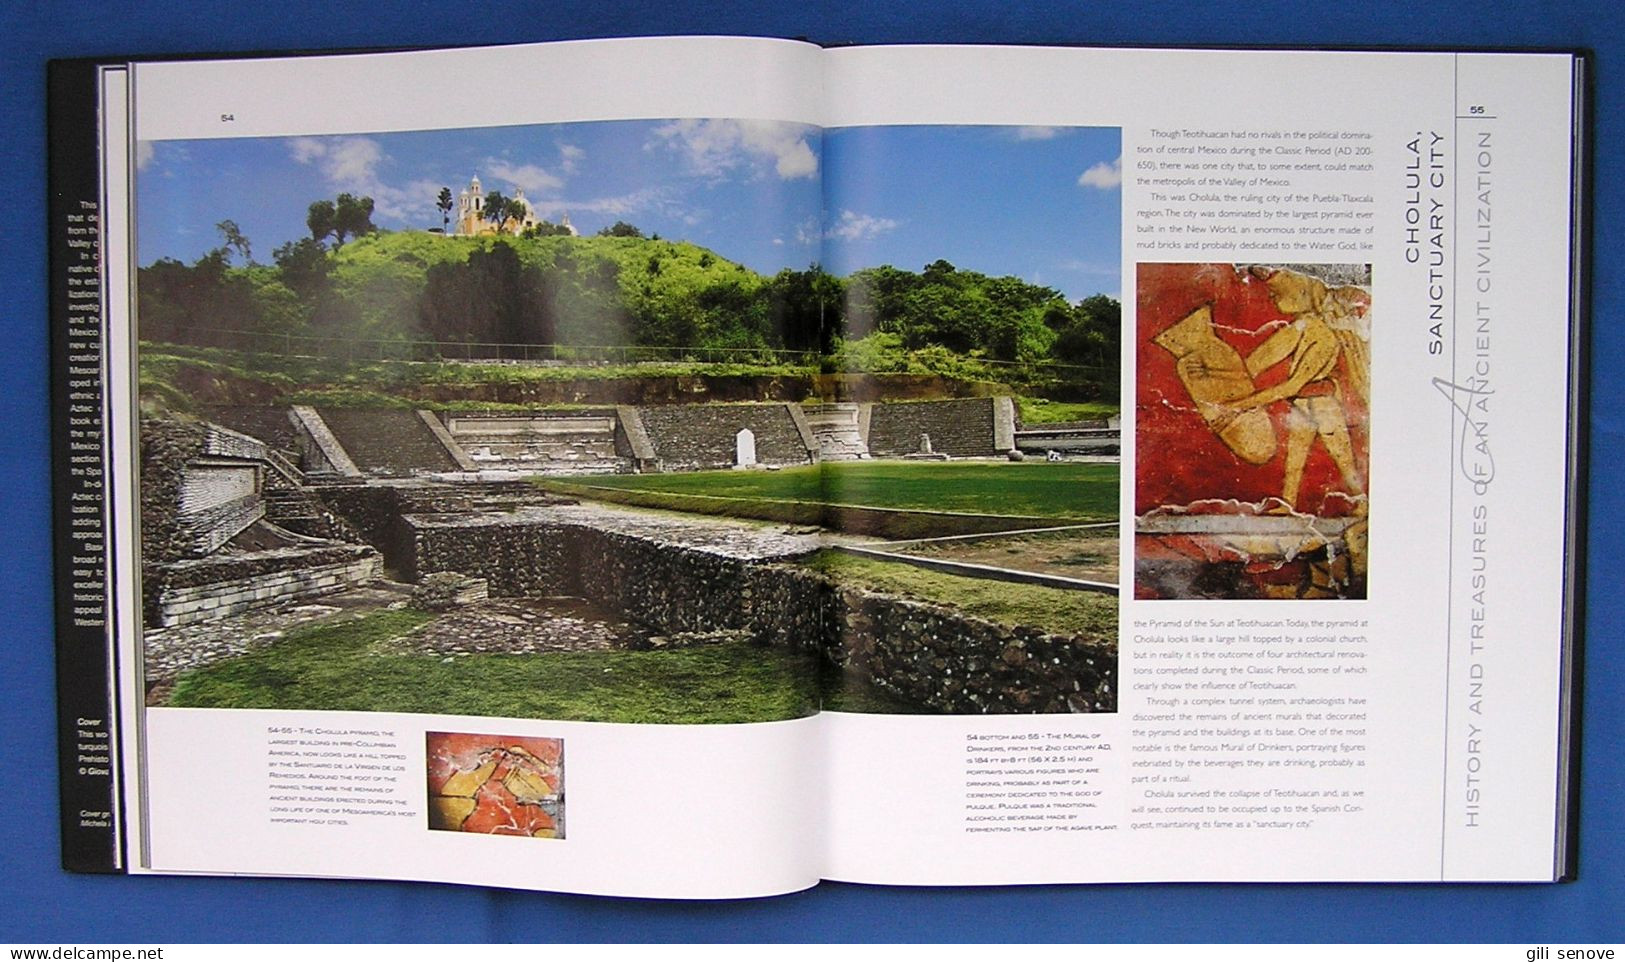 The Aztecs: History And Treasures Of An Ancient Civilization 2007 - Fine Arts